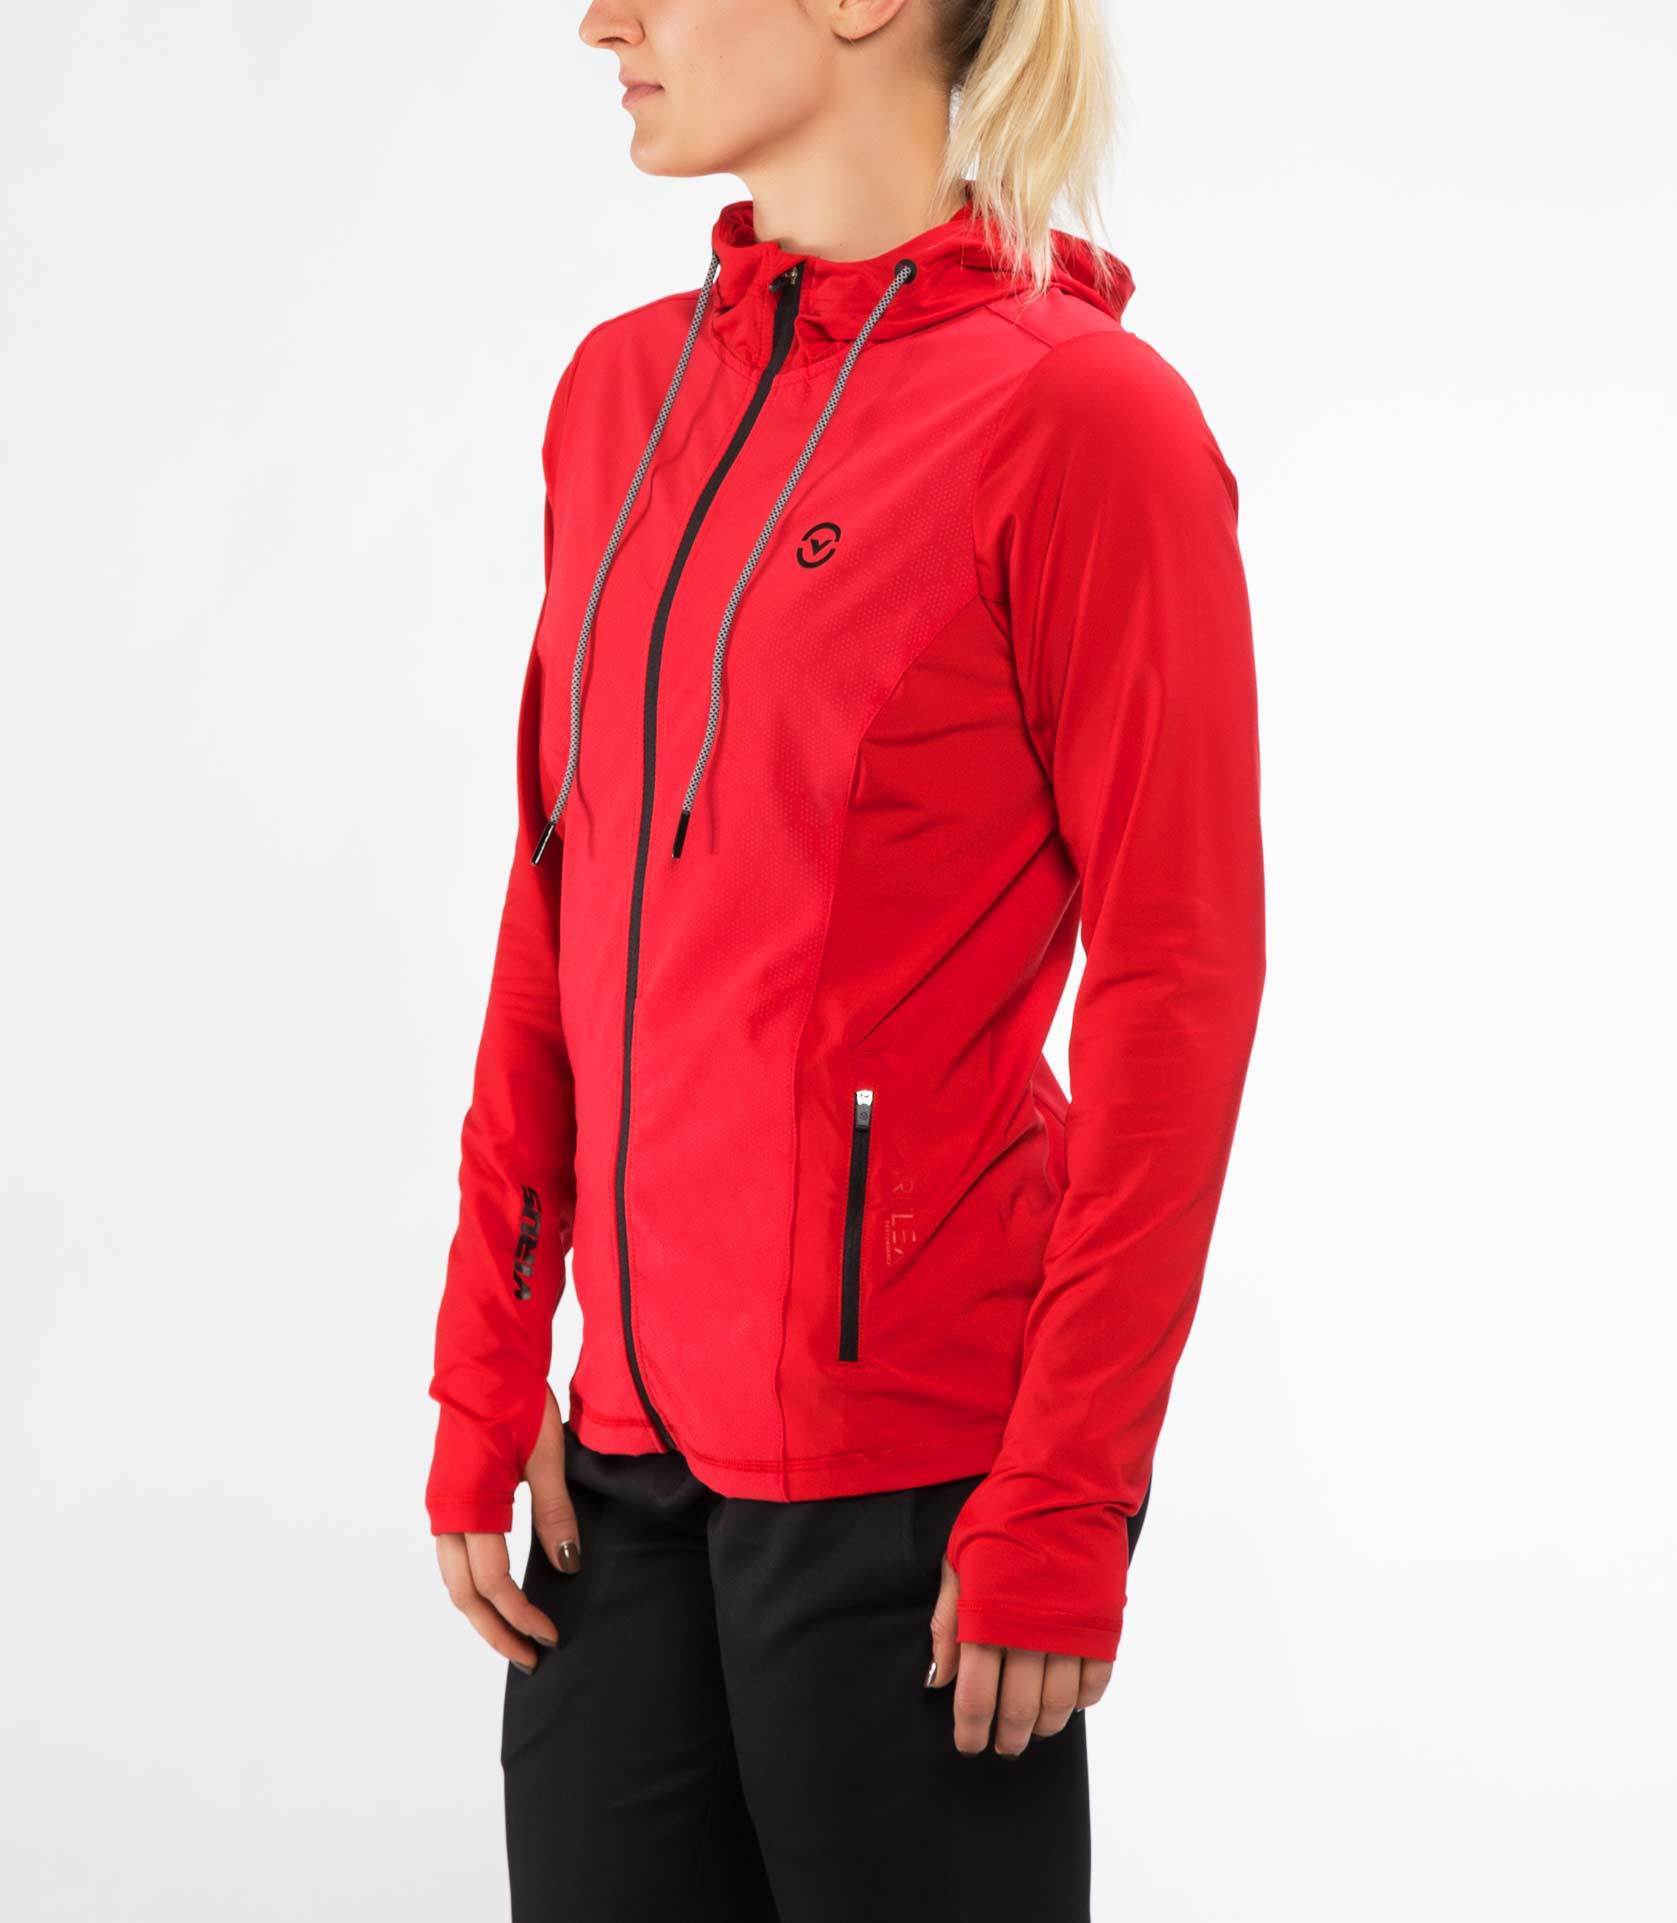 Virus | ECO27 Women's AirFlex Zip Jacket - XTC Fitness - Exercise Equipment Superstore - Canada - Jackets